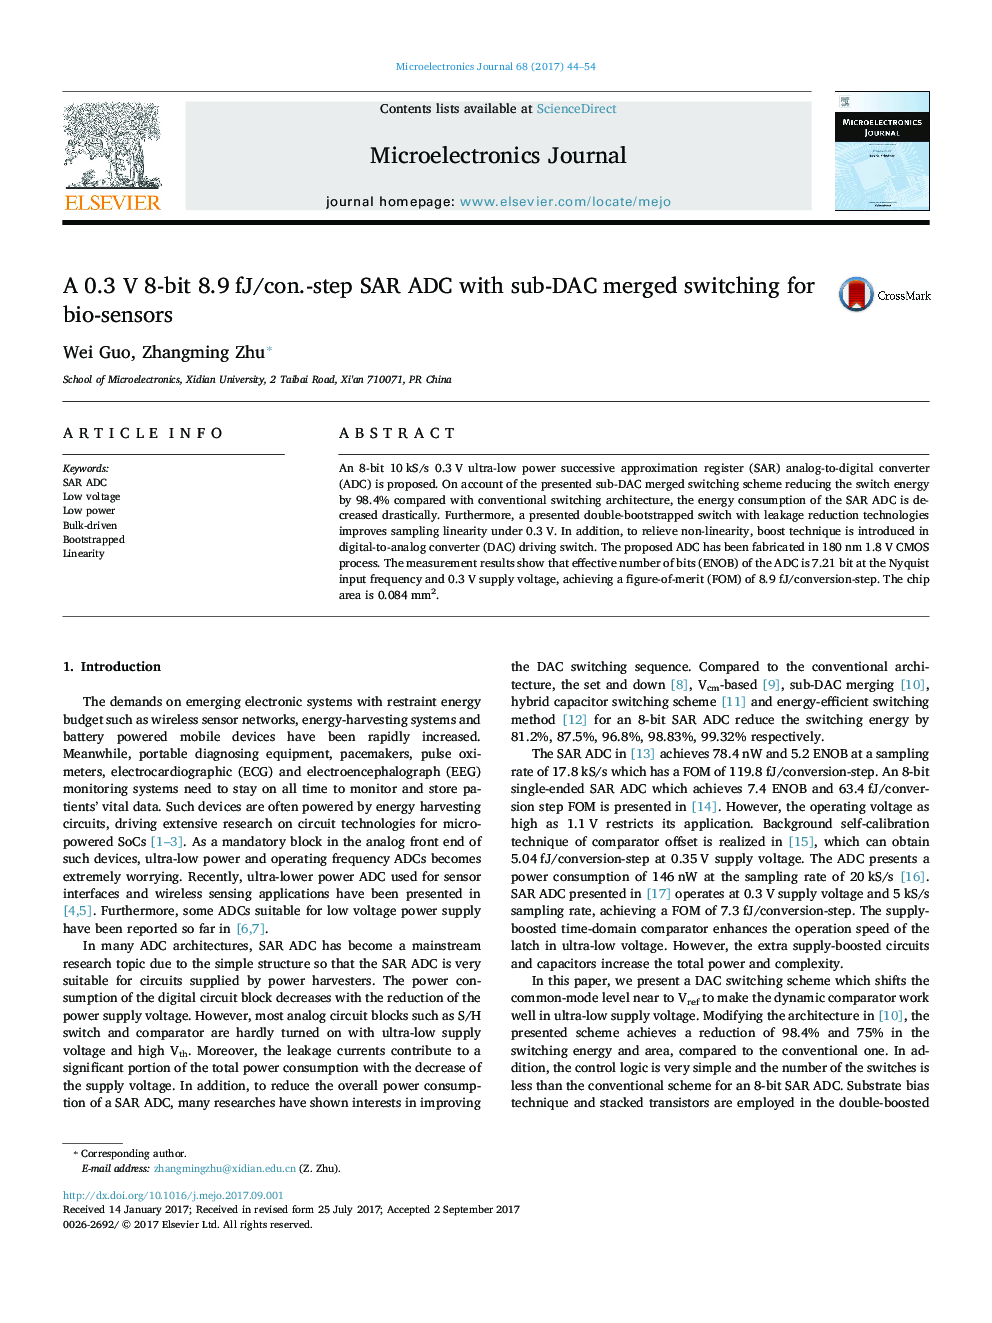 A 0.3 V 8-bit 8.9Â fJ/con.-step SAR ADC with sub-DAC merged switching for bio-sensors